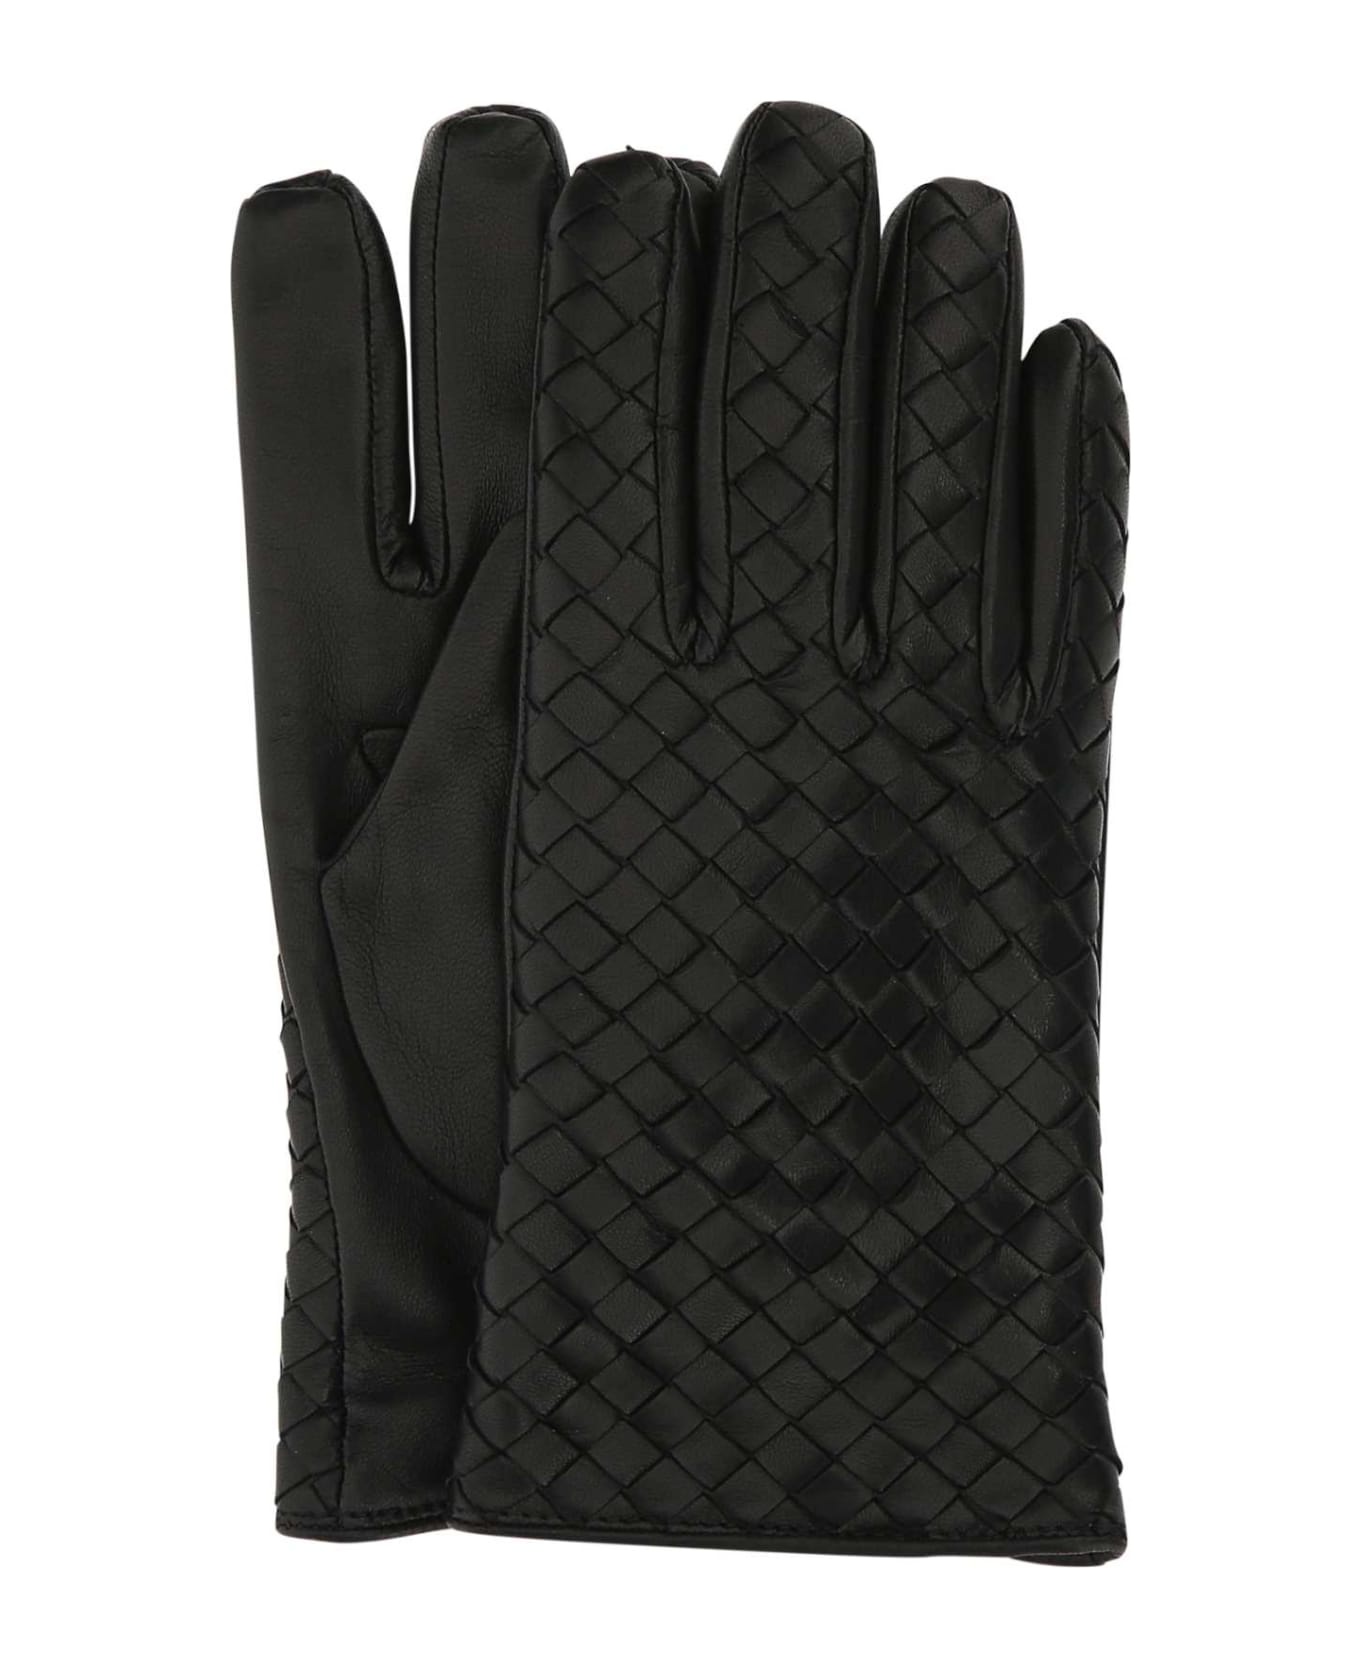 Black Leather Gloves - 1